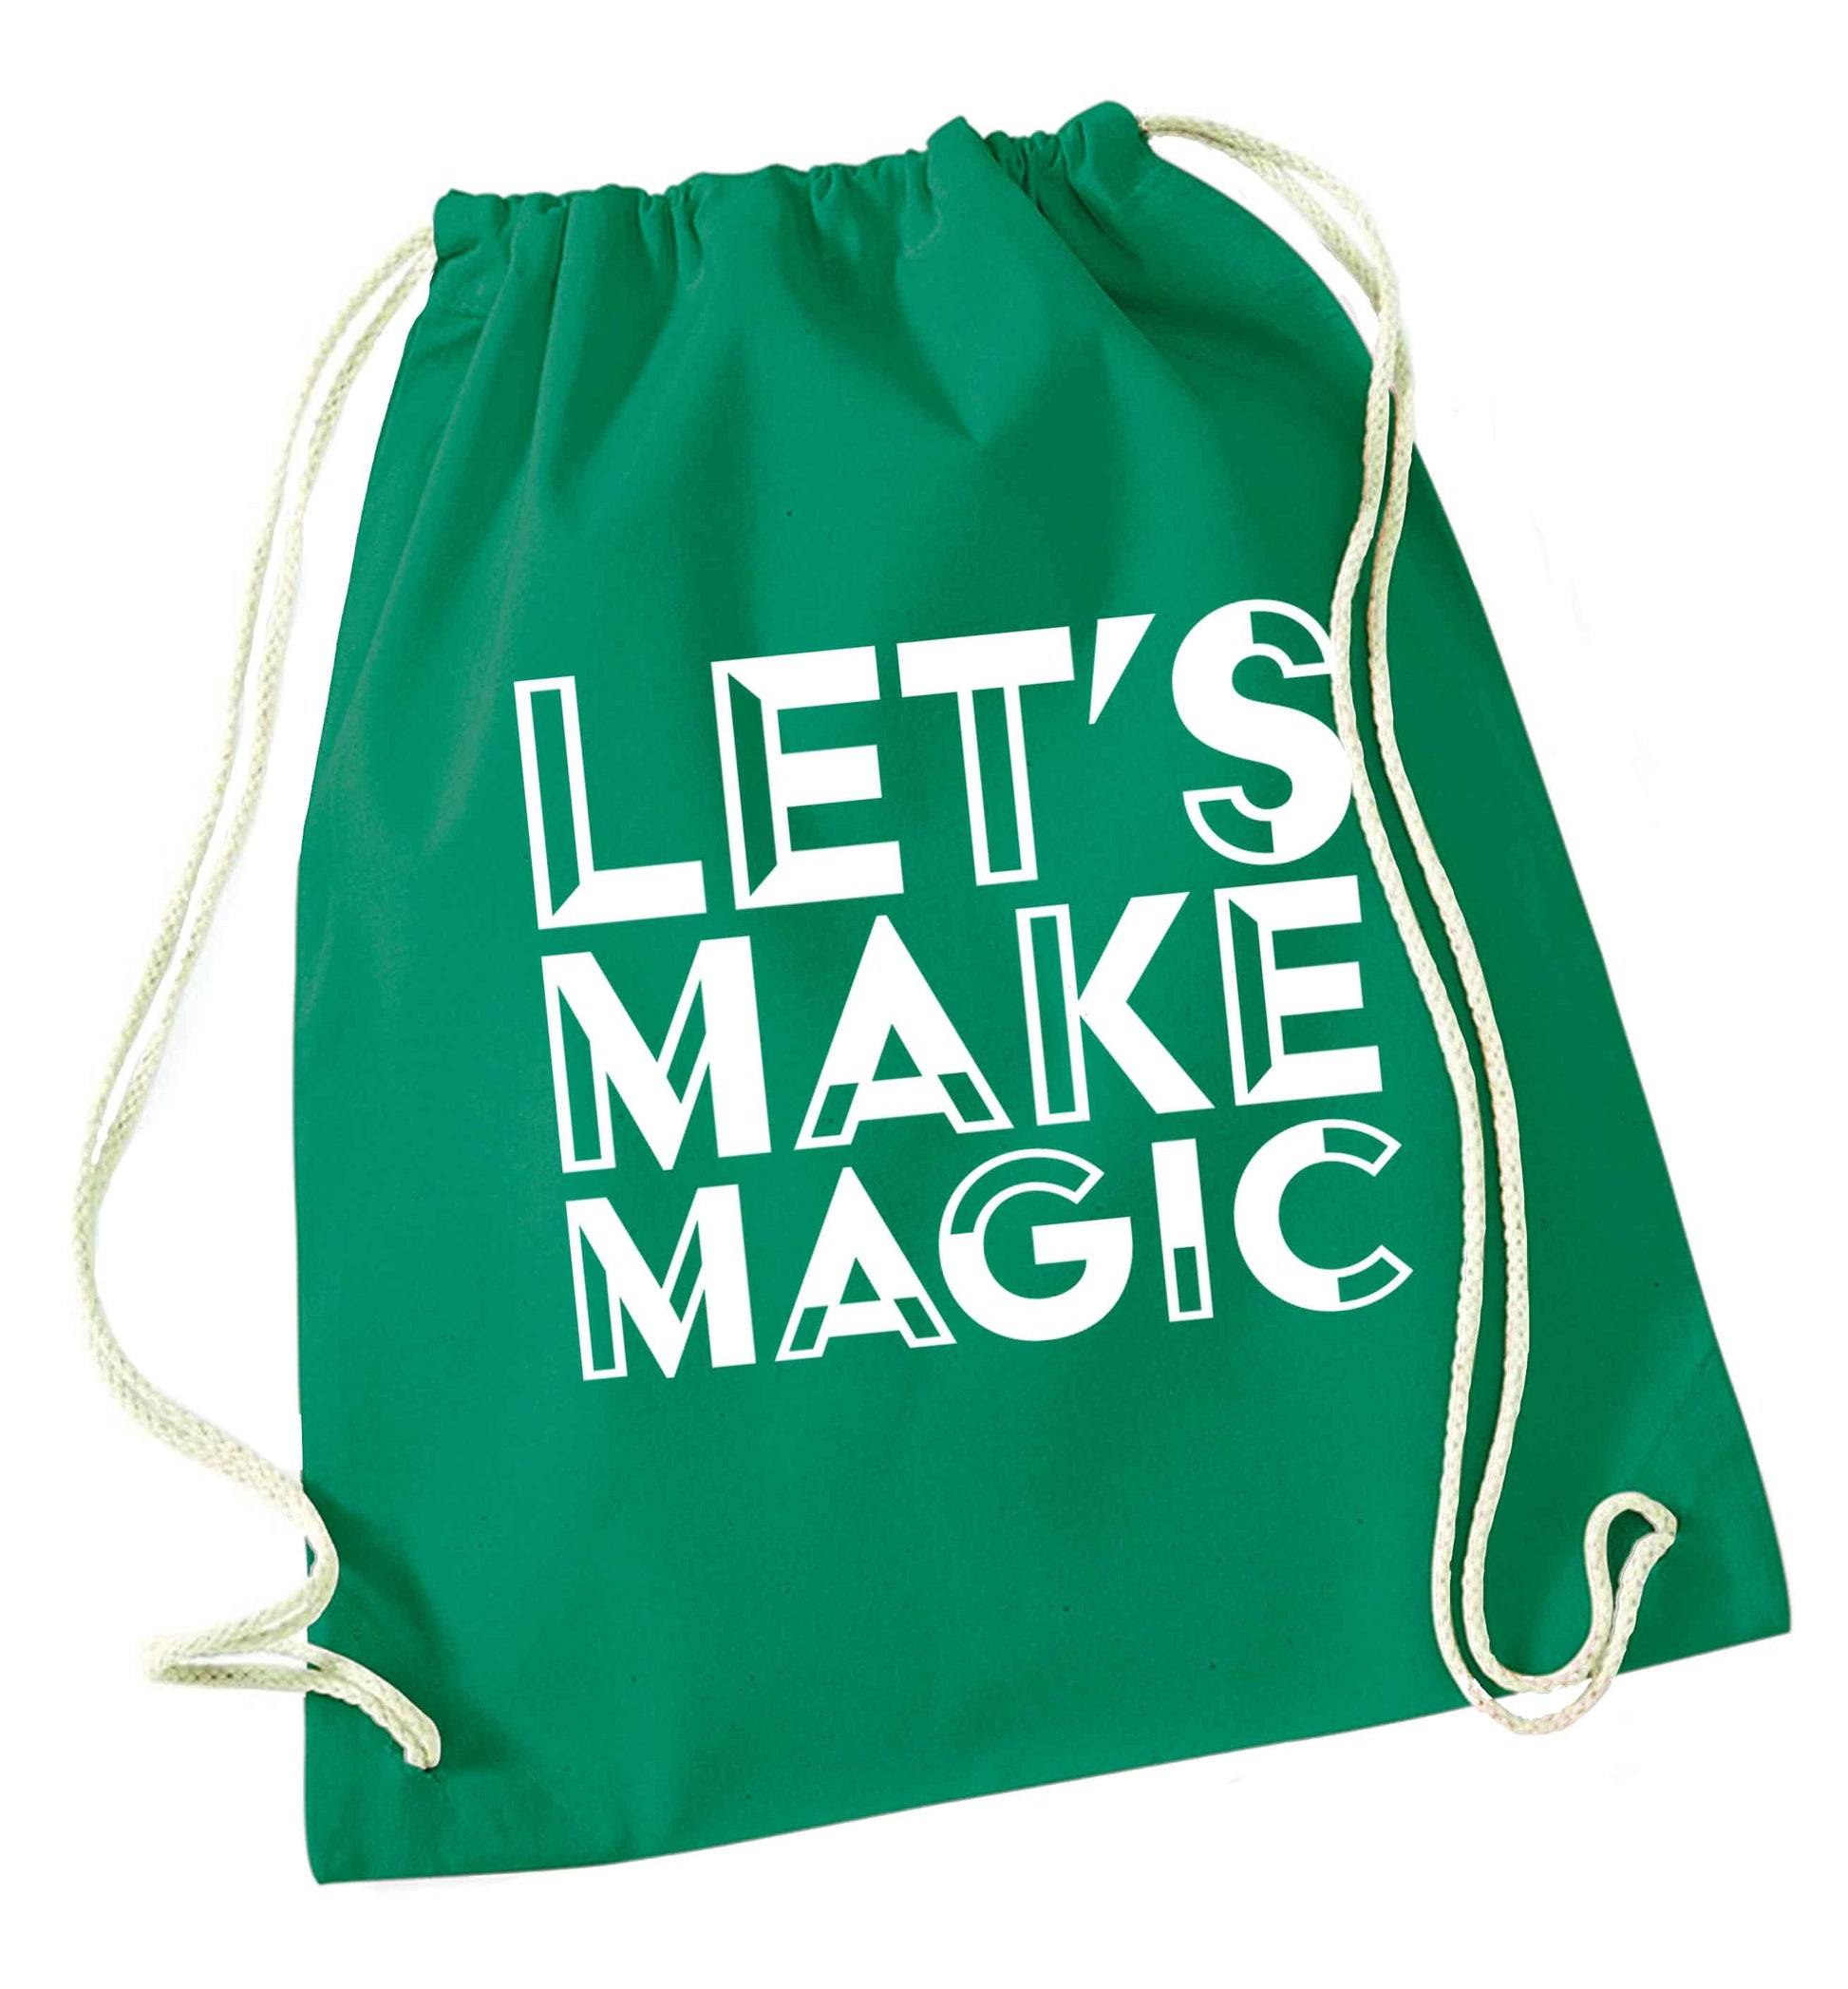 Let's make magic green drawstring bag